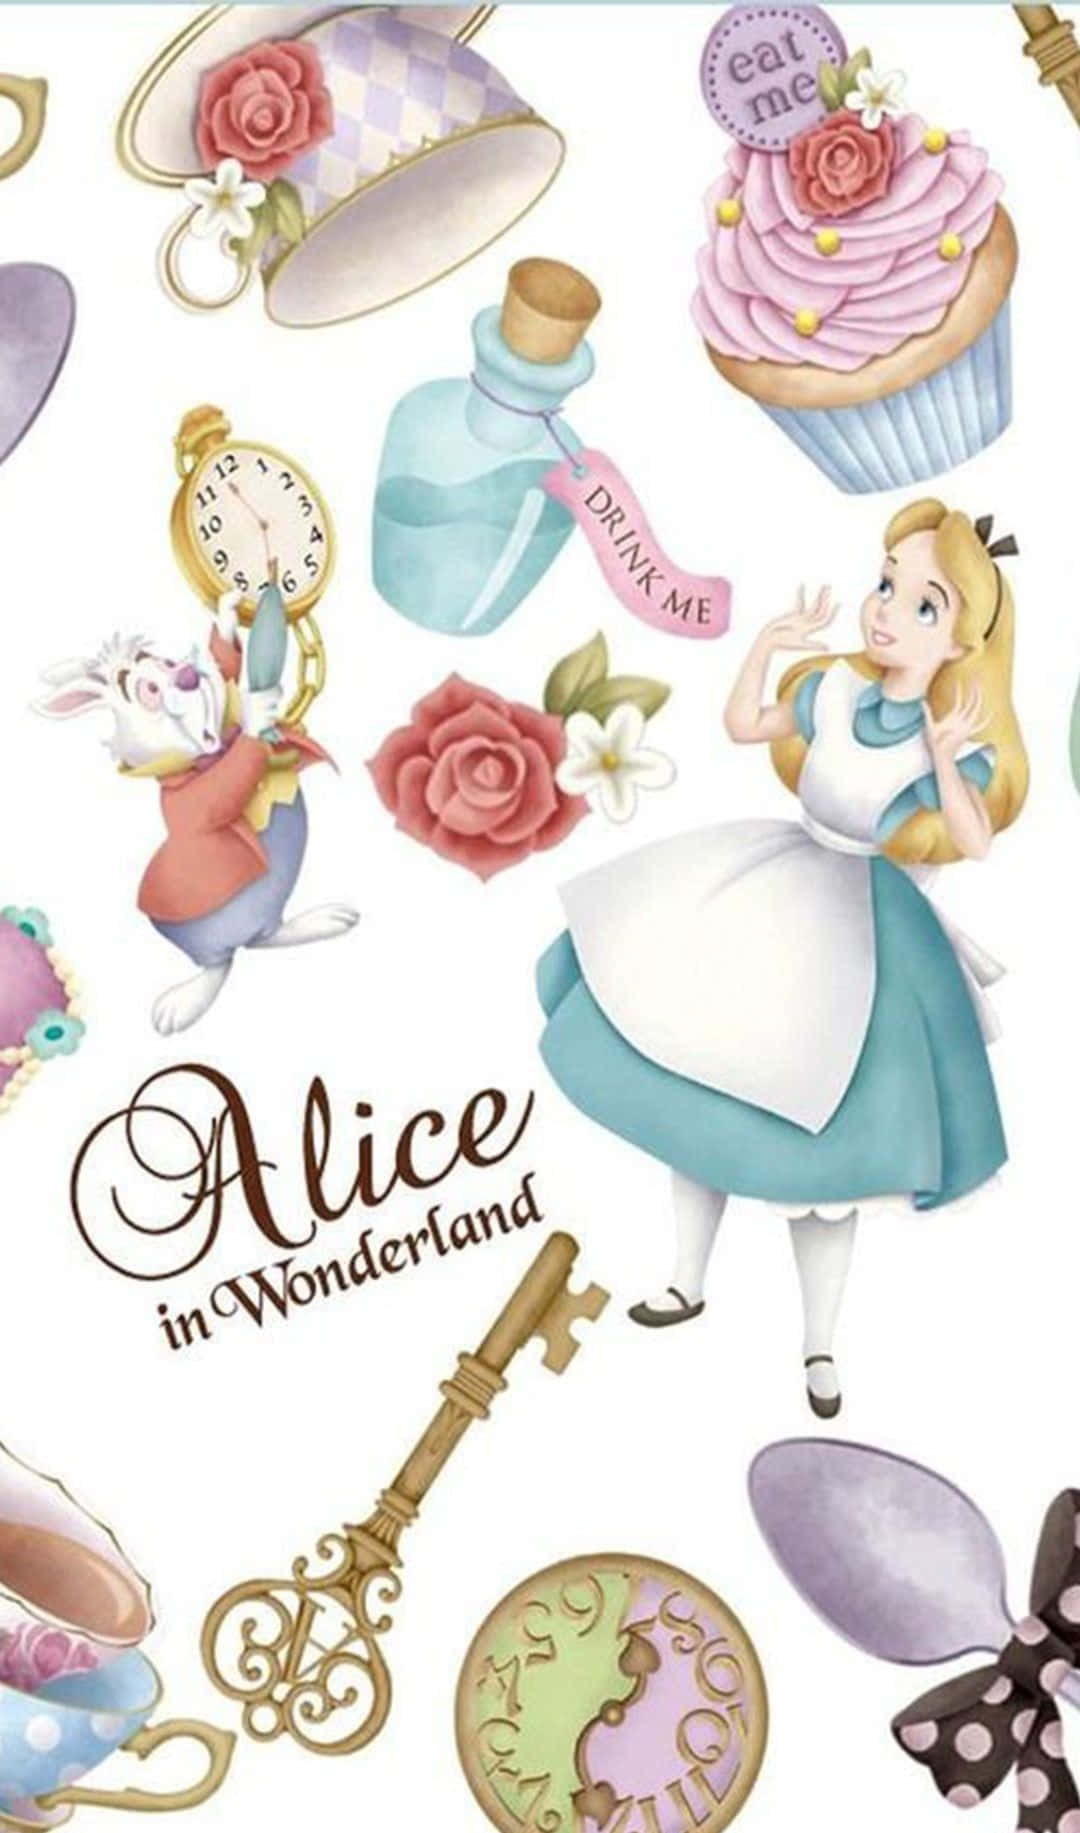 Alice falder ned i kaninhullet i eventyrland.